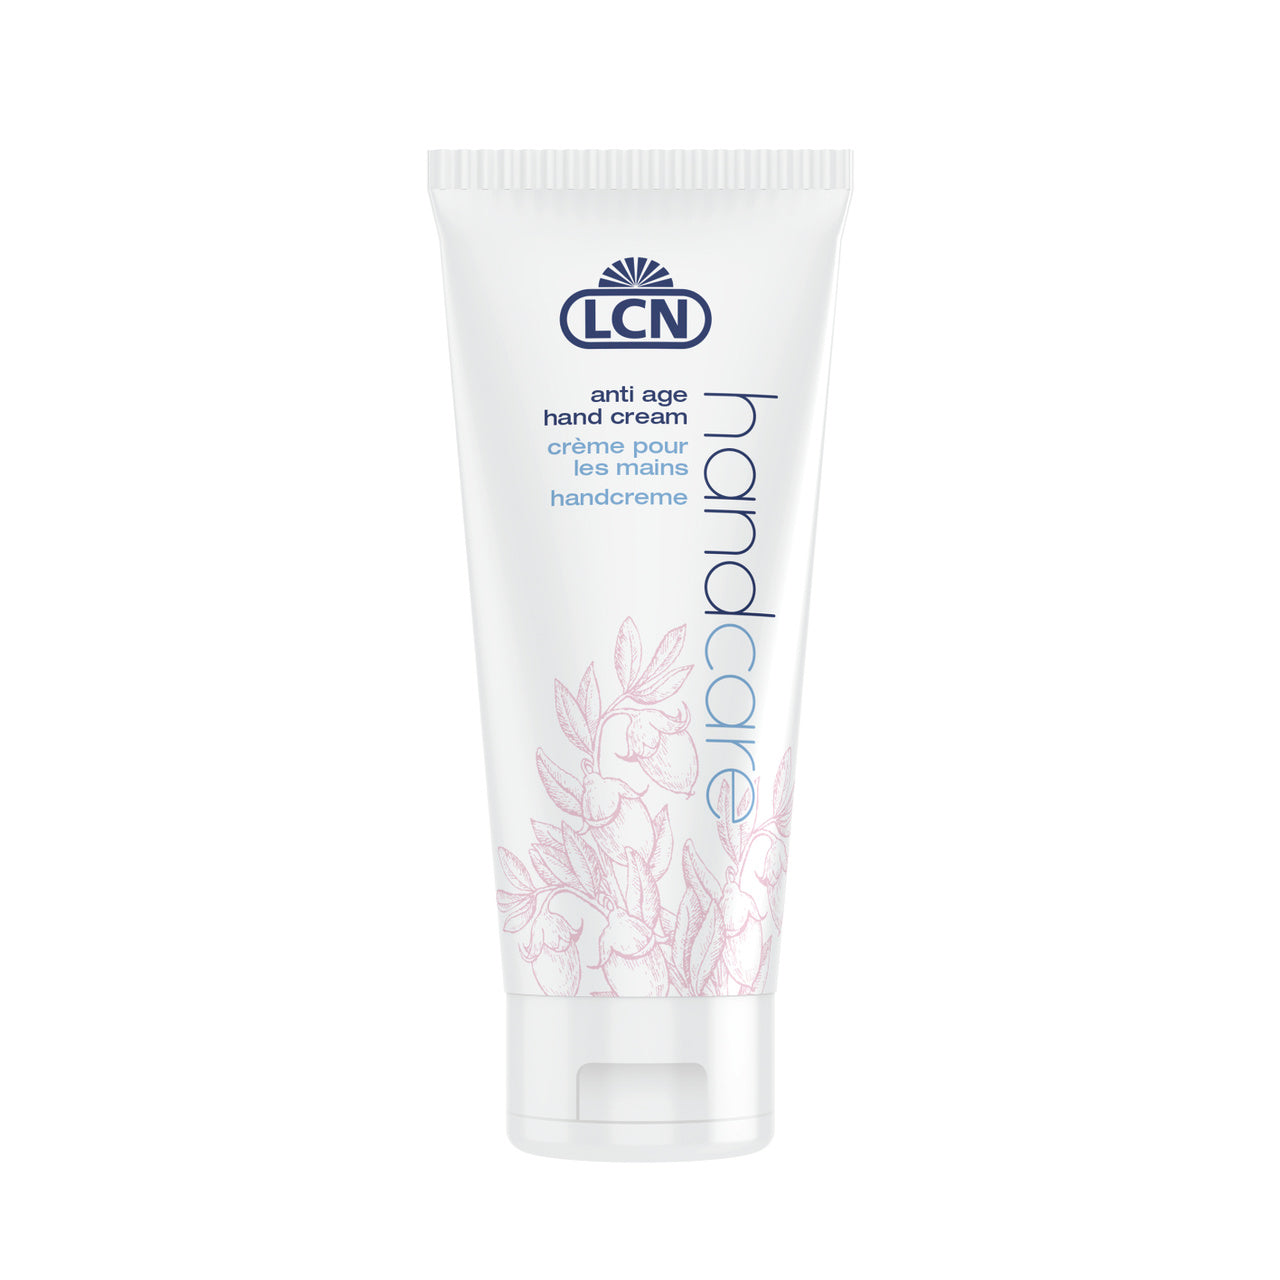 LCN Anti Age Hand Cream, 300 ml